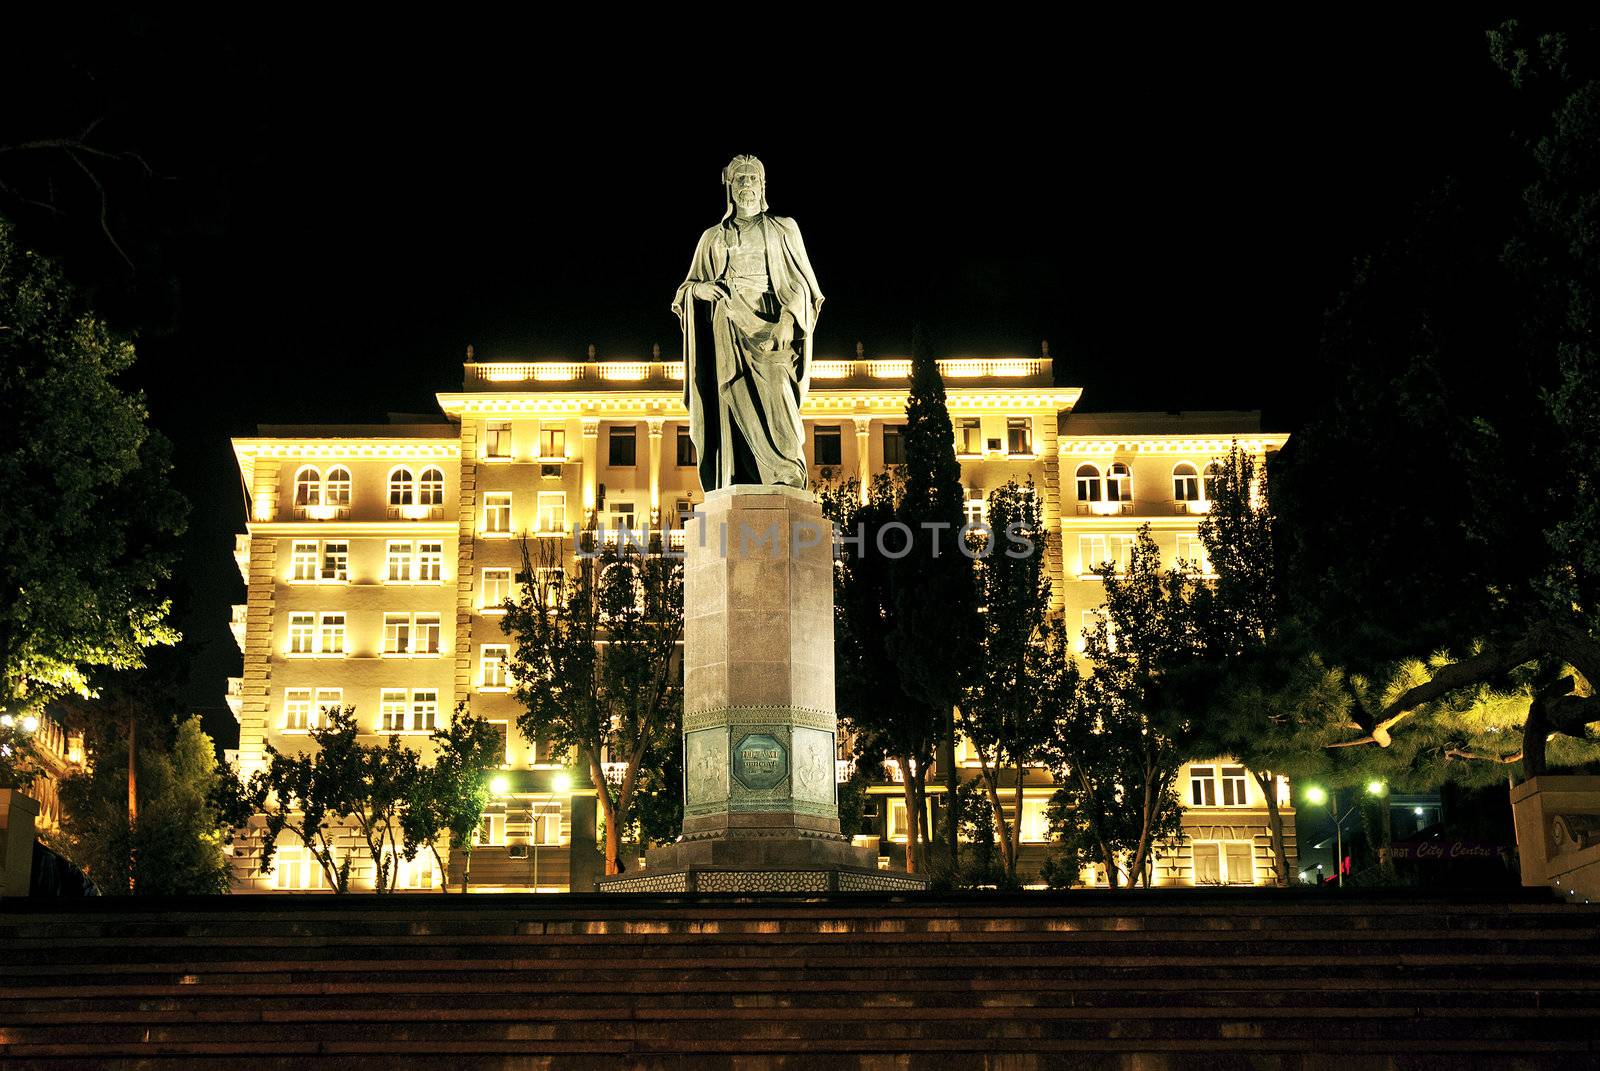 city night scene in baku azerbaijan by jackmalipan